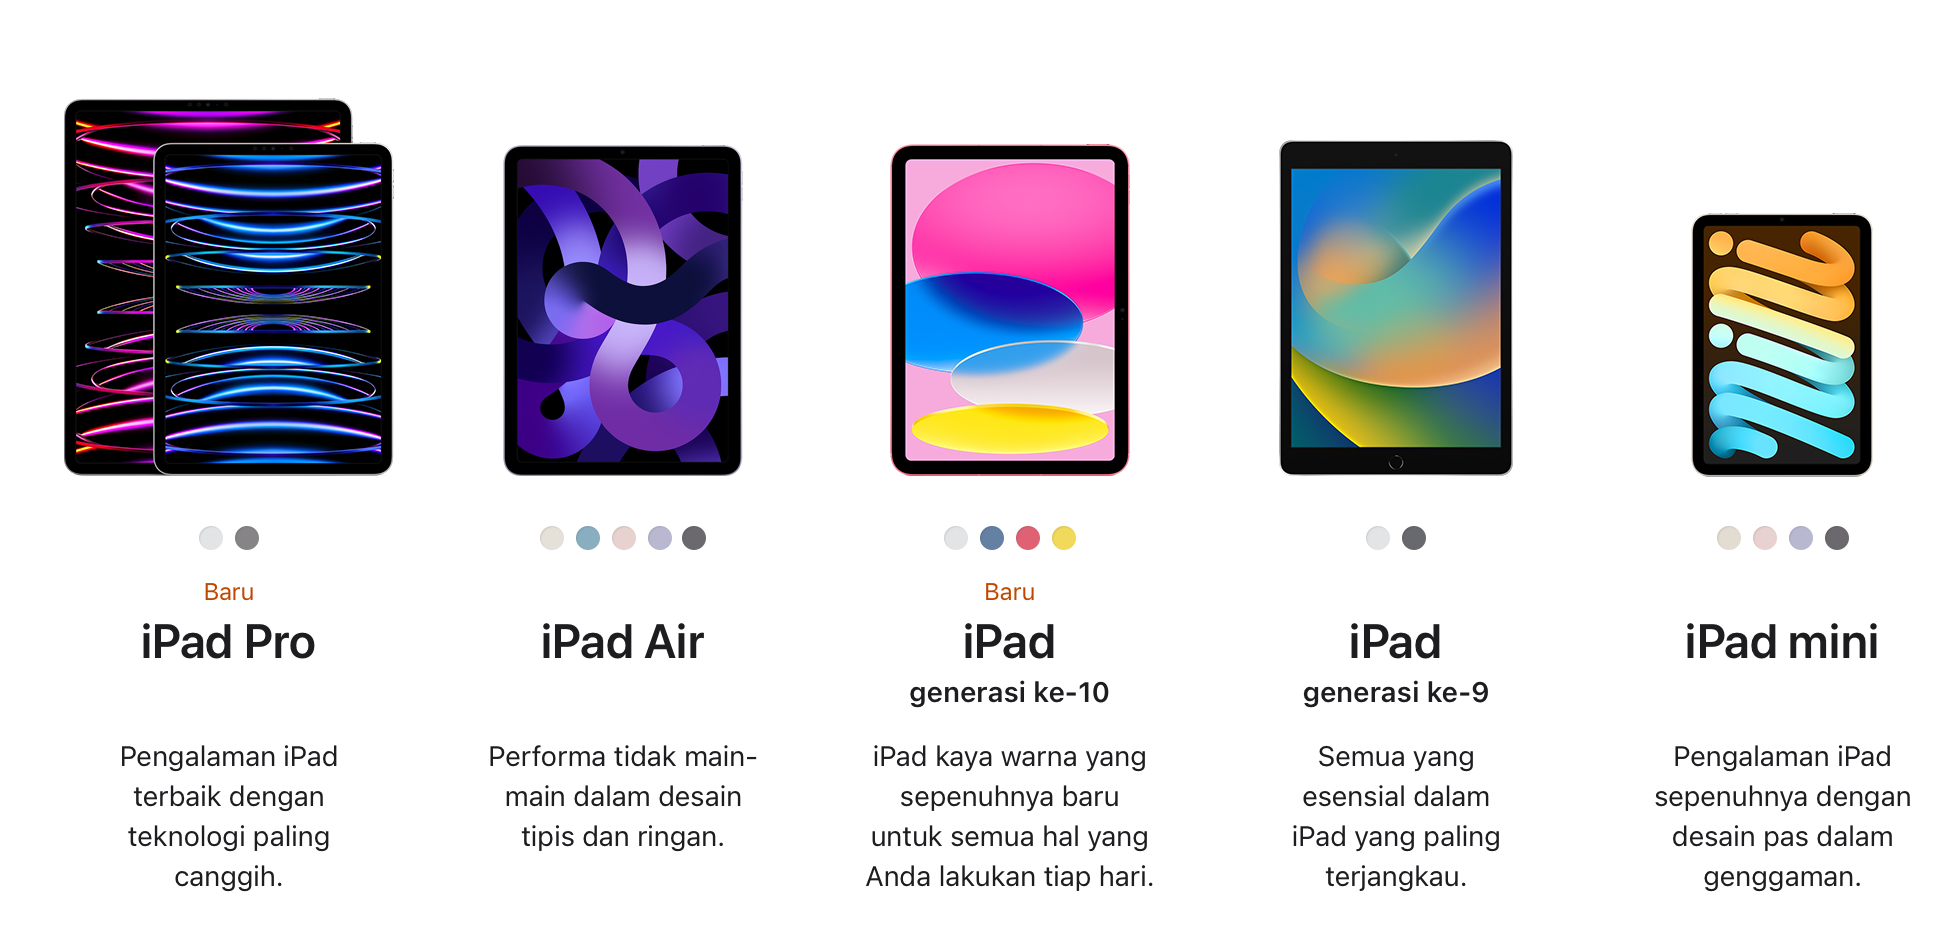 Spesifikasi 5 iPad dari Terbaru sampai yang Mini, Kira-Kira Mau Pilih yang Mana Nih?